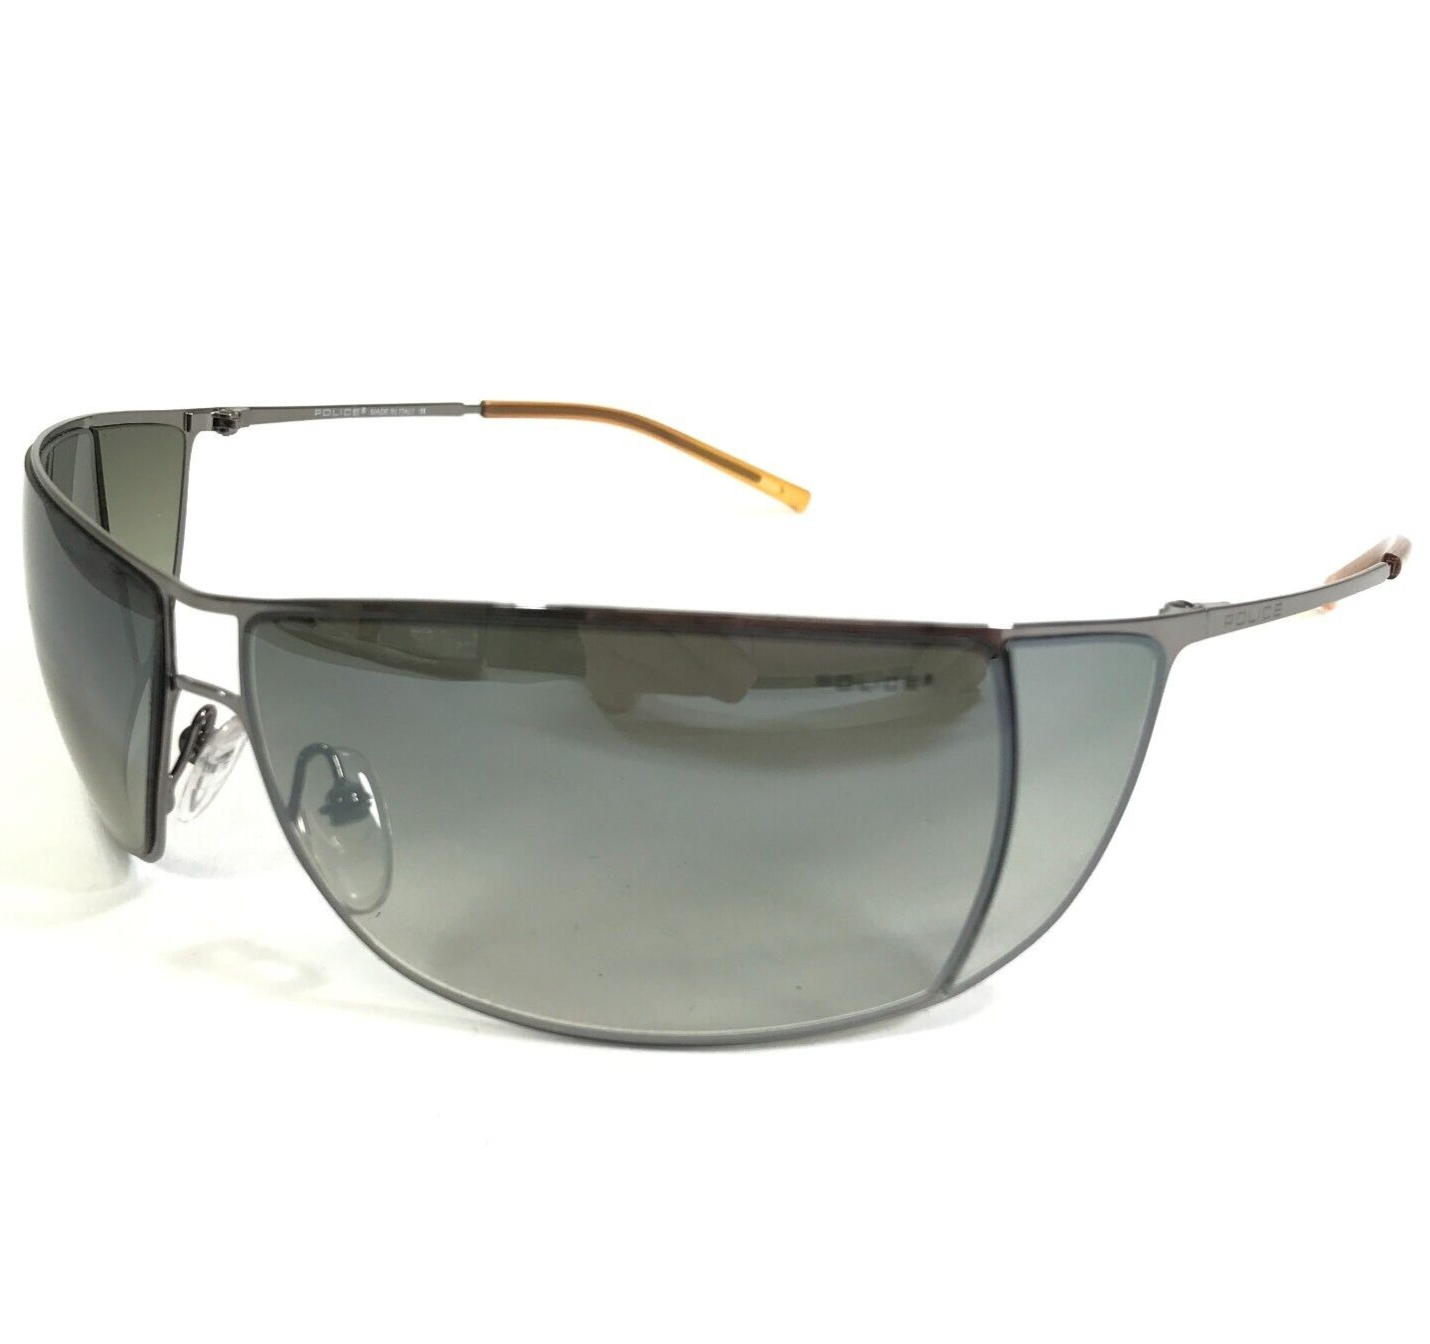 Police Sunglasses Frames MOD.2819 65 COL.568V Gray Wrap Frames with Green Lenses - $65.24